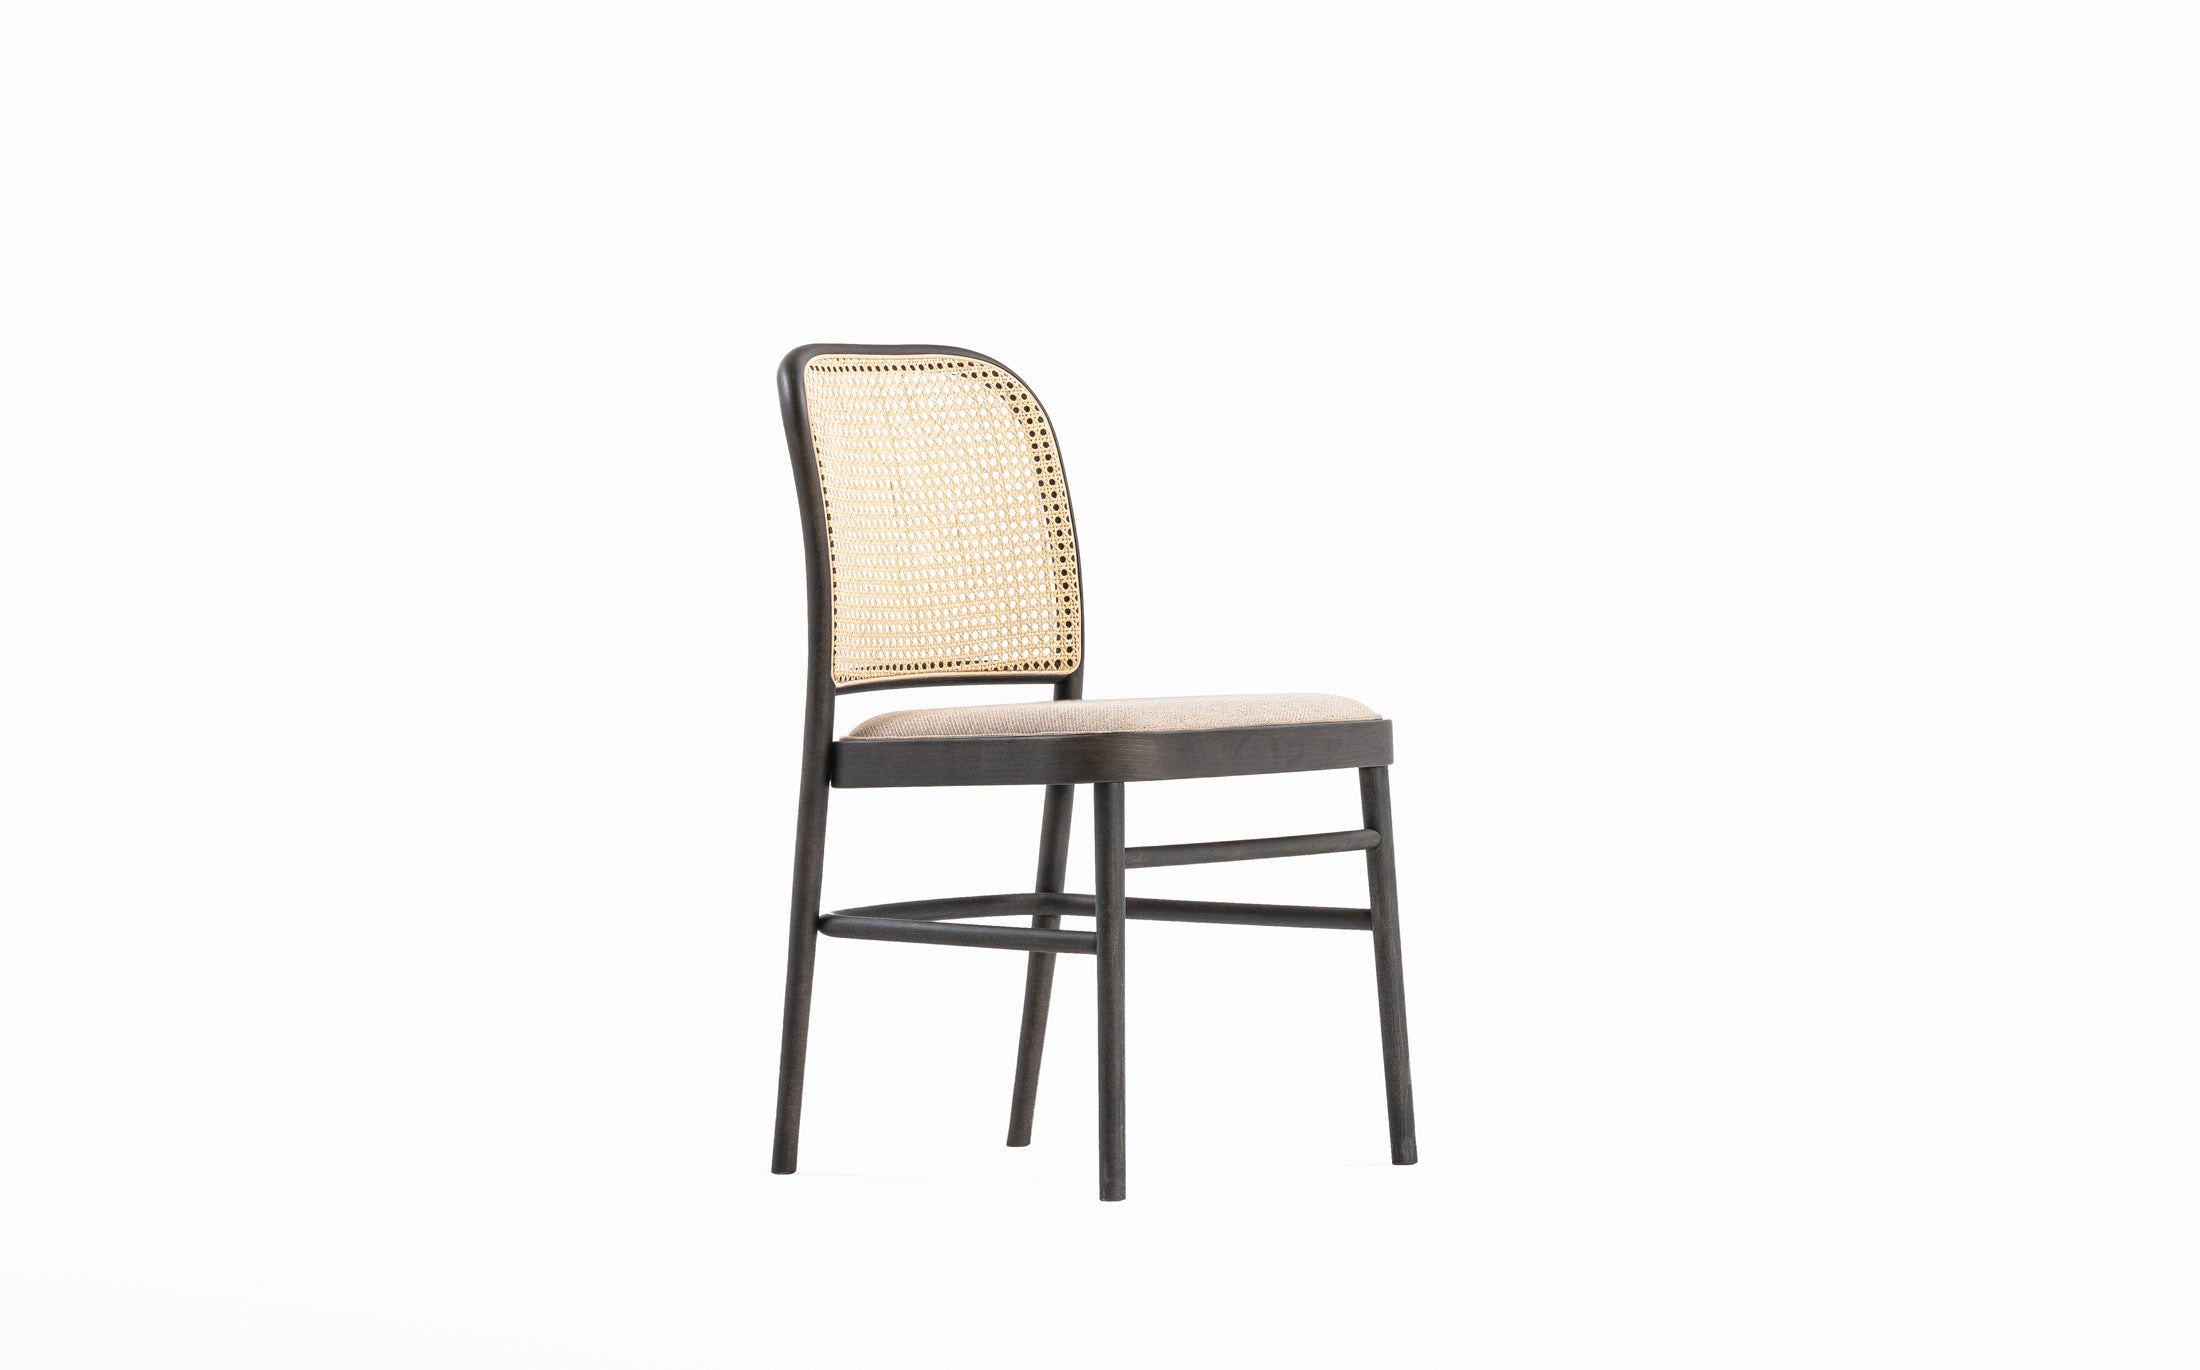 The bent chair #Seat materials_fabric1 bergen 05/09